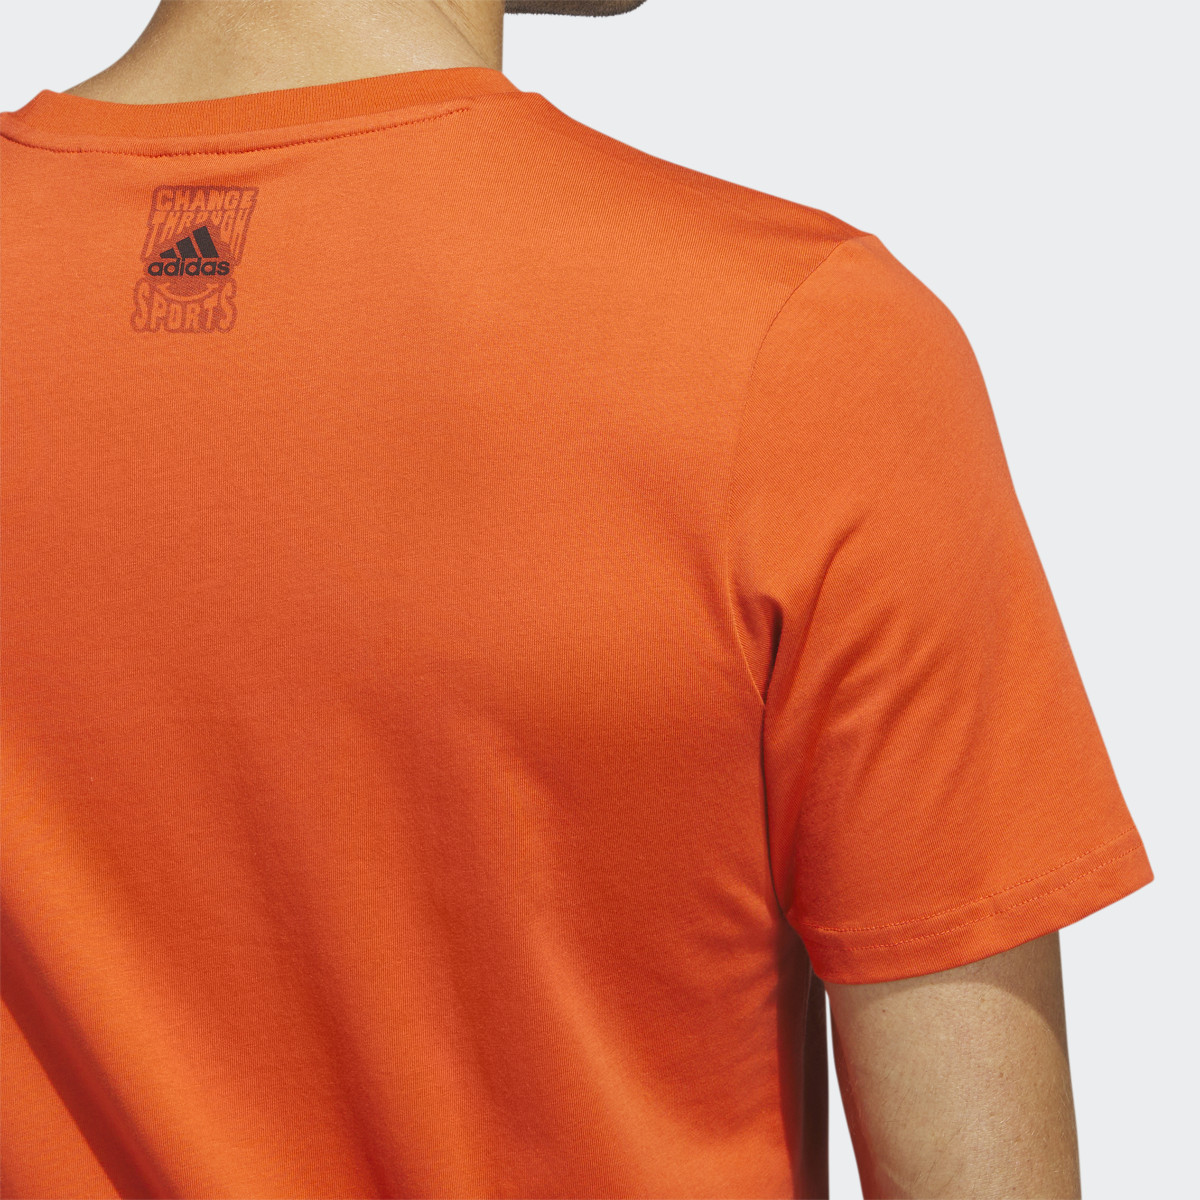 Adidas Change Through Sports Earth Graphic T-Shirt. 7